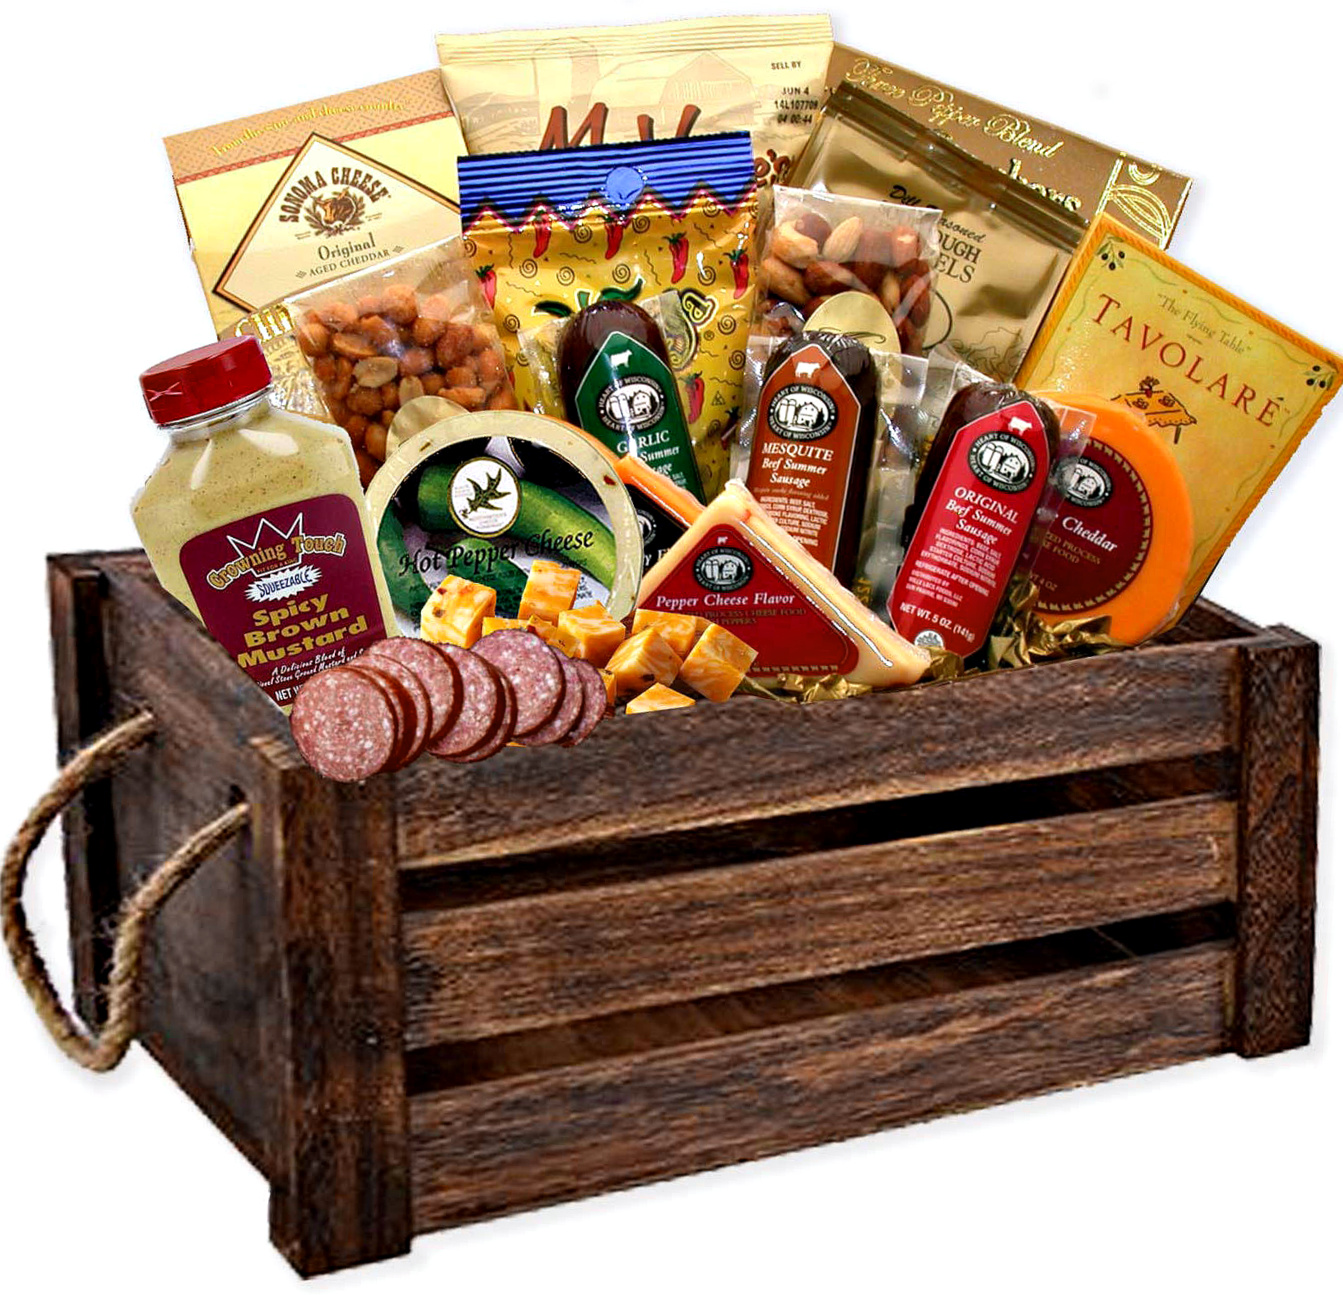 https://images.adorablegiftbaskets.com/media/best-Snack-gift-box.jpg